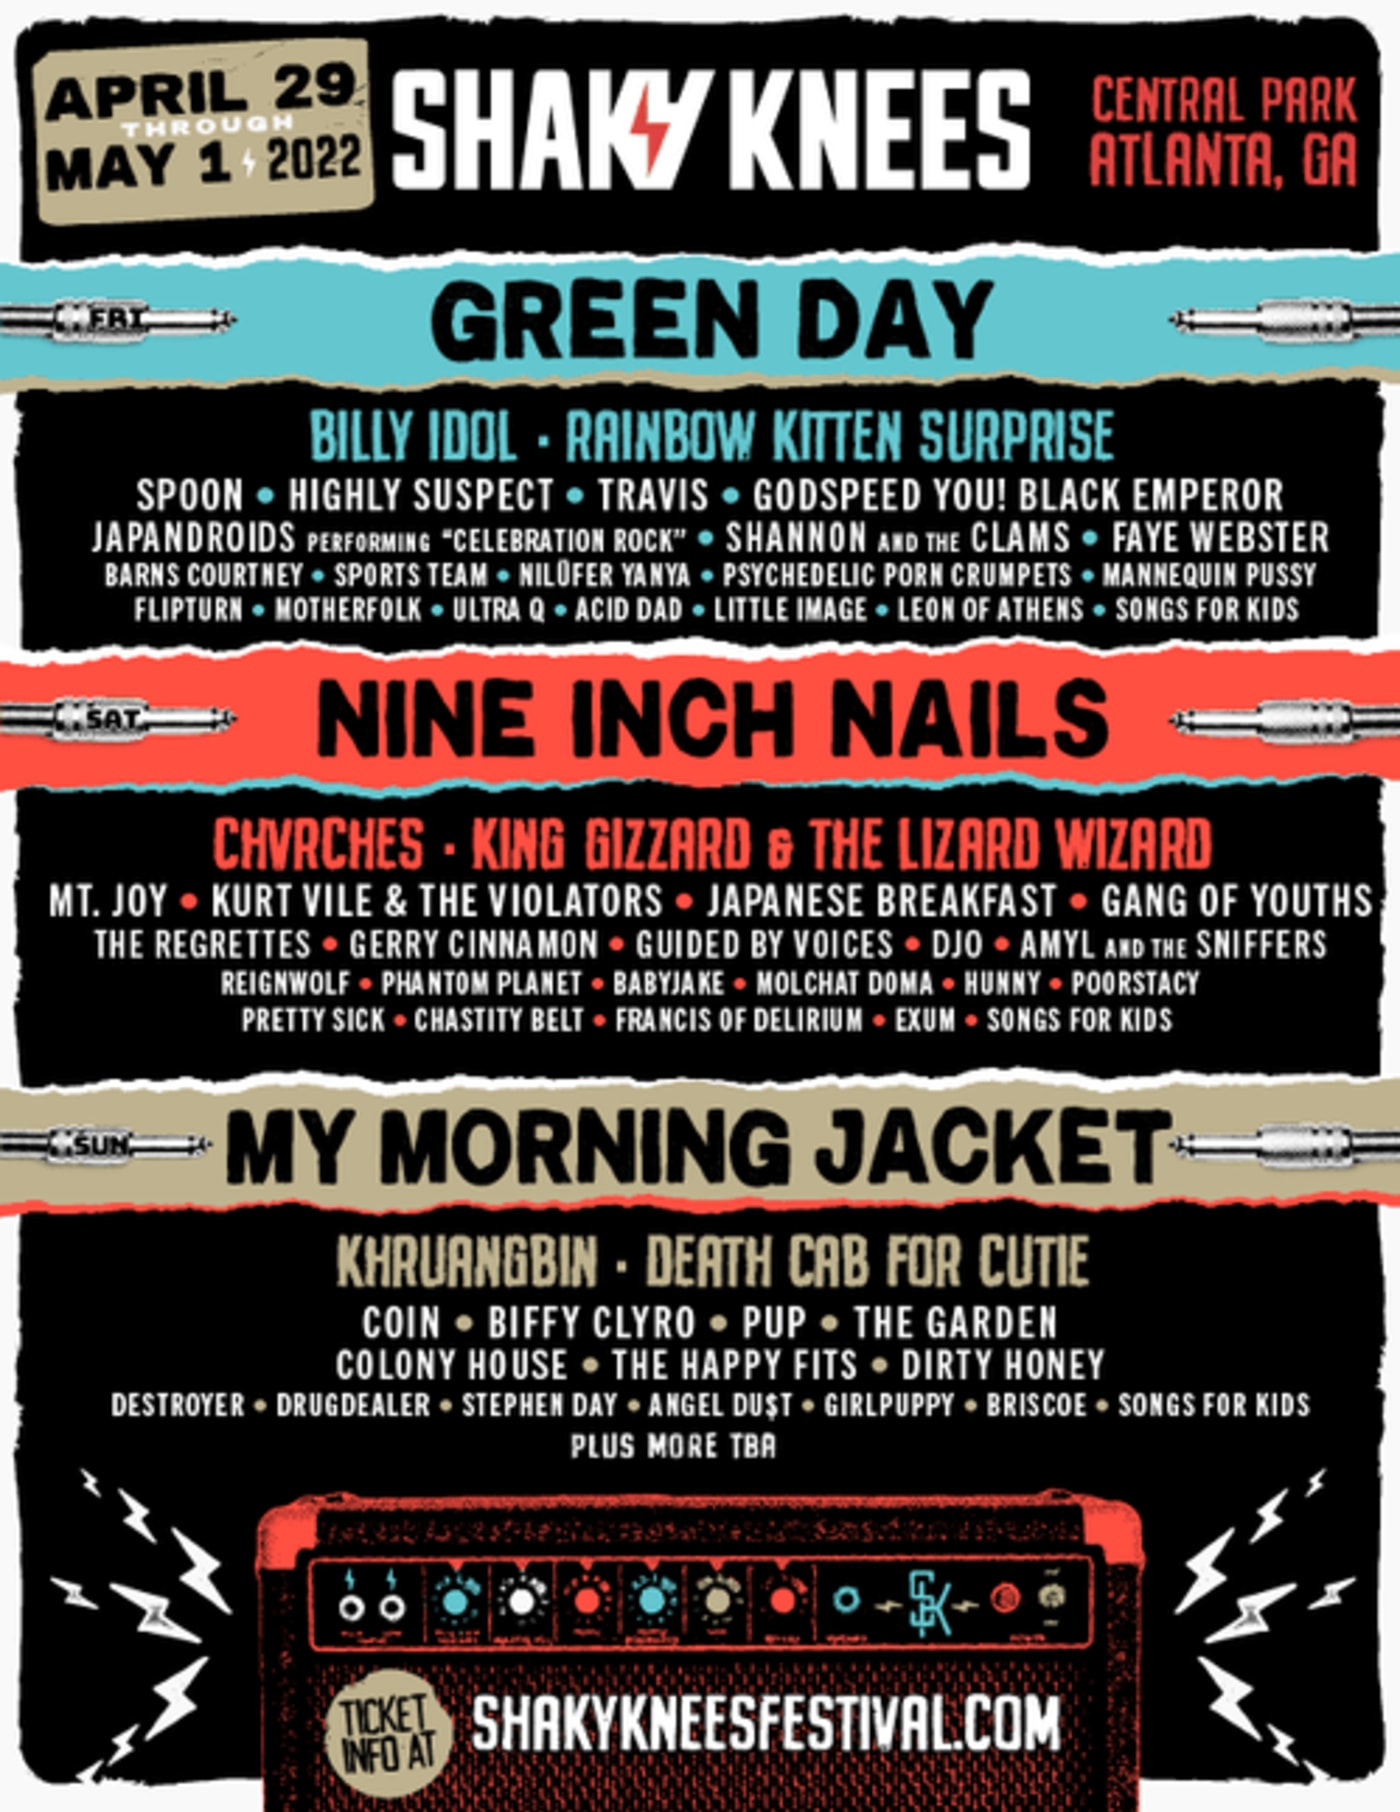 Shaky Knees shares its festival flyer